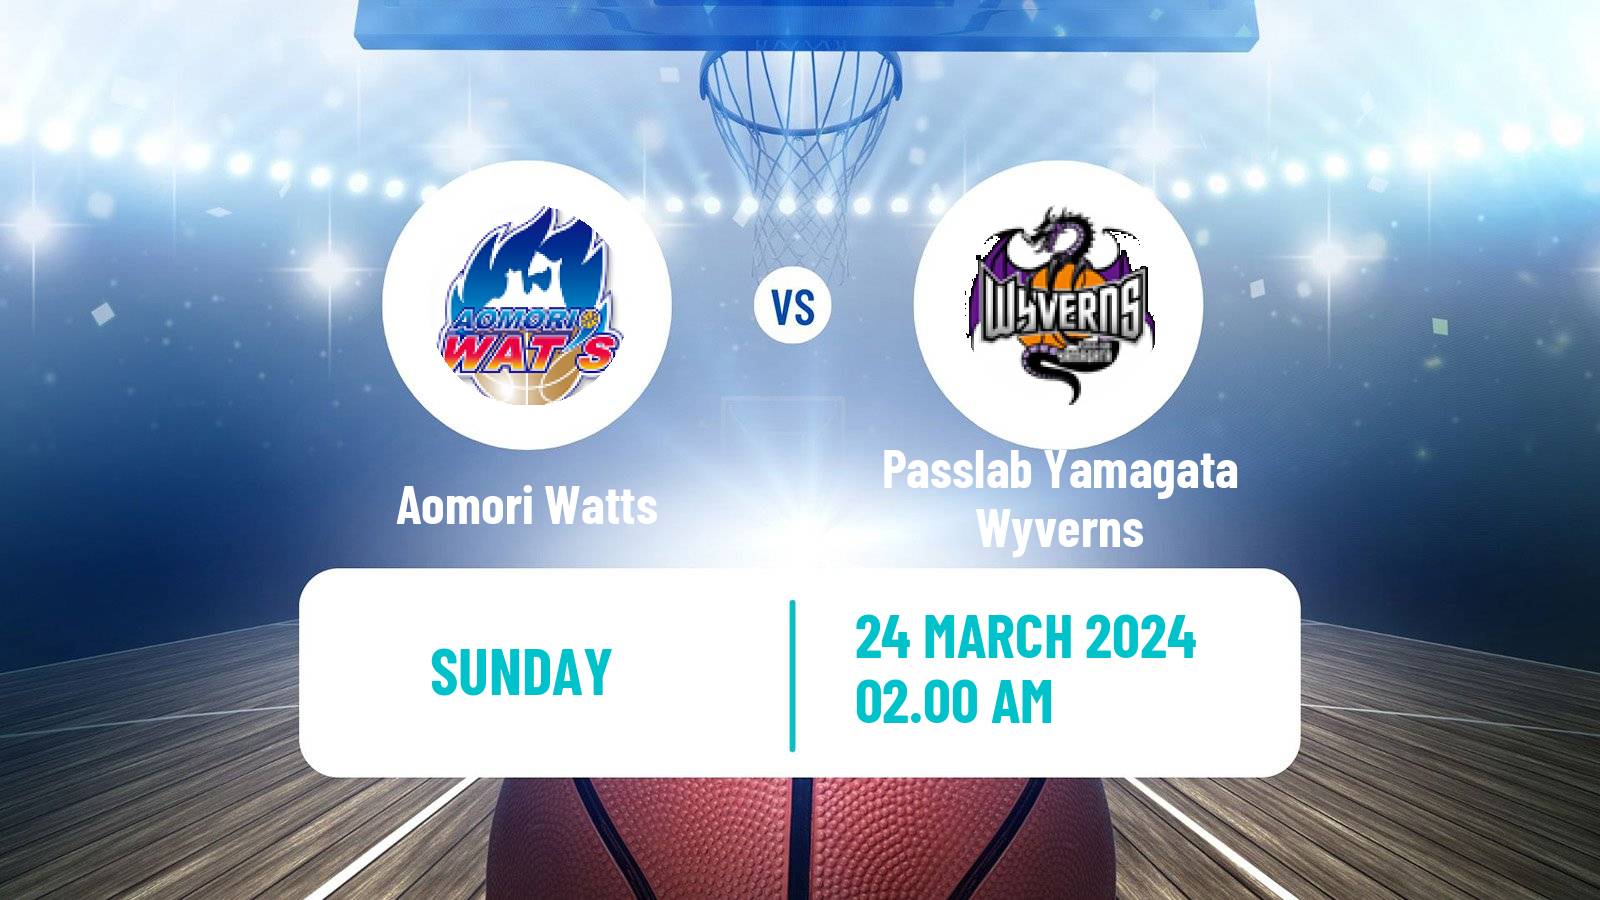 Basketball Japan B2 League Basketball Aomori Watts - Passlab Yamagata Wyverns